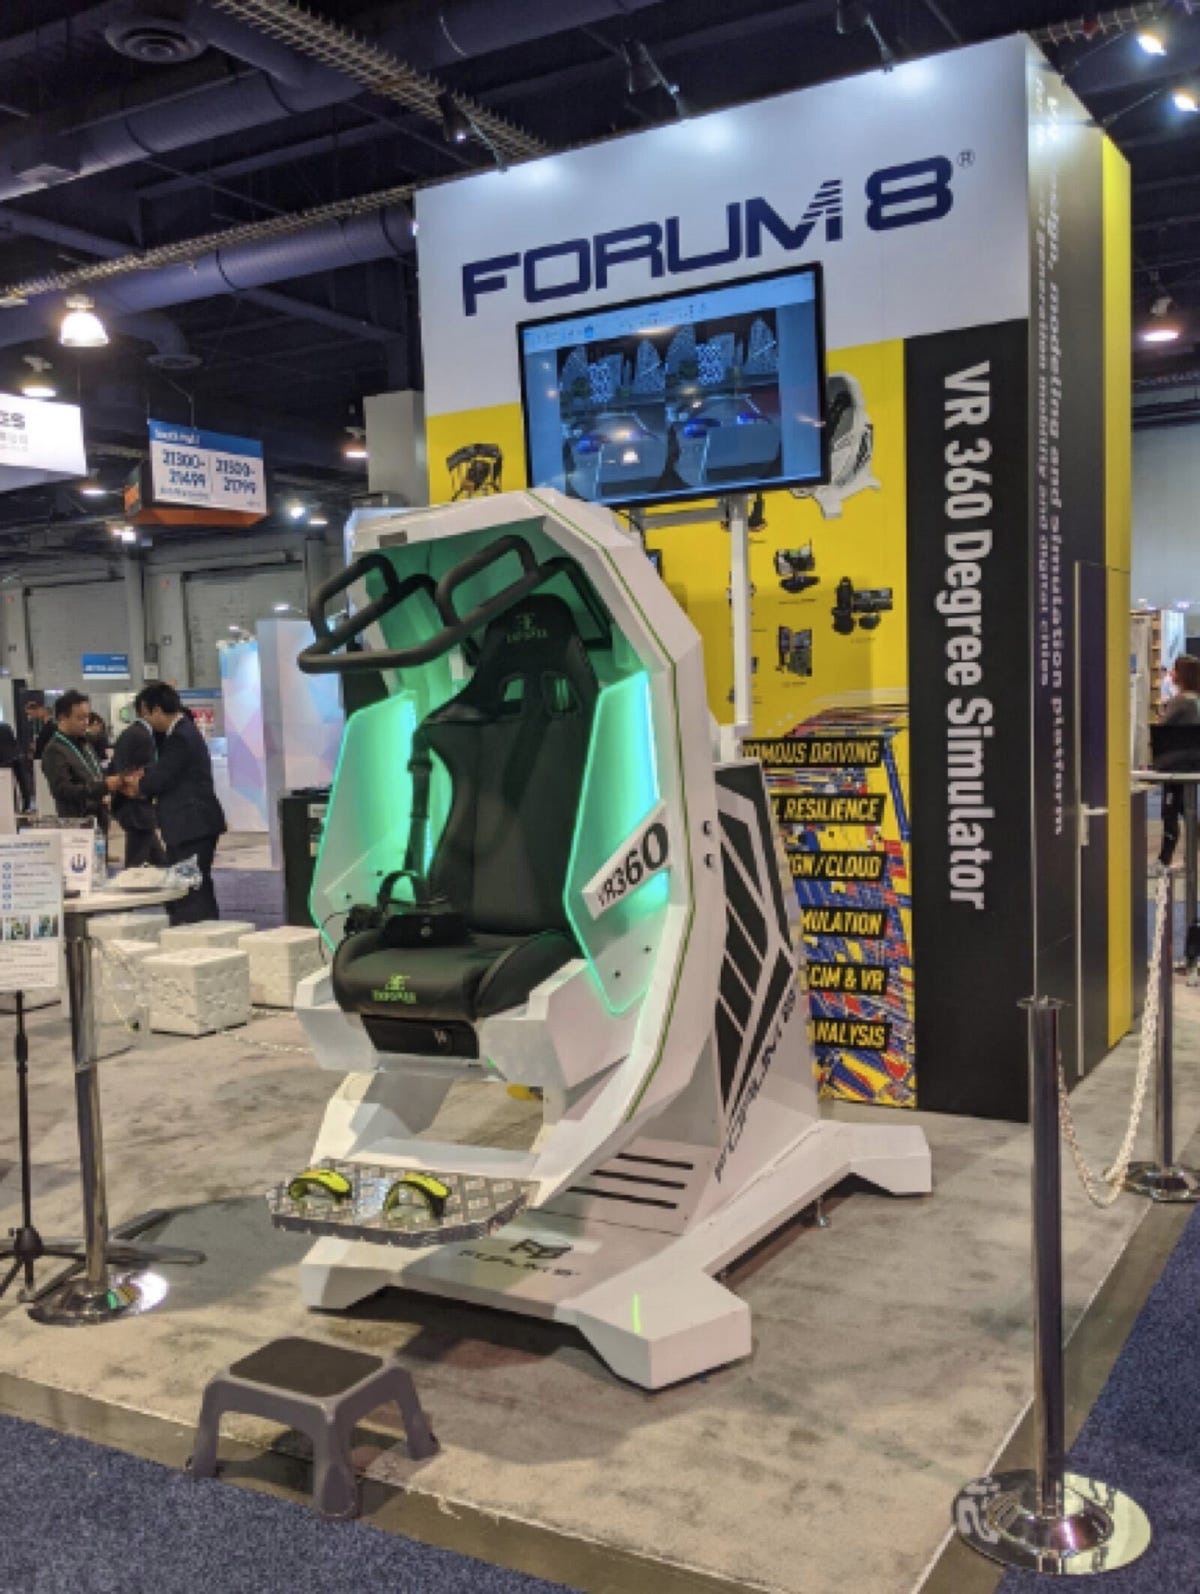 Forum 8 VR 360-degree Simulator